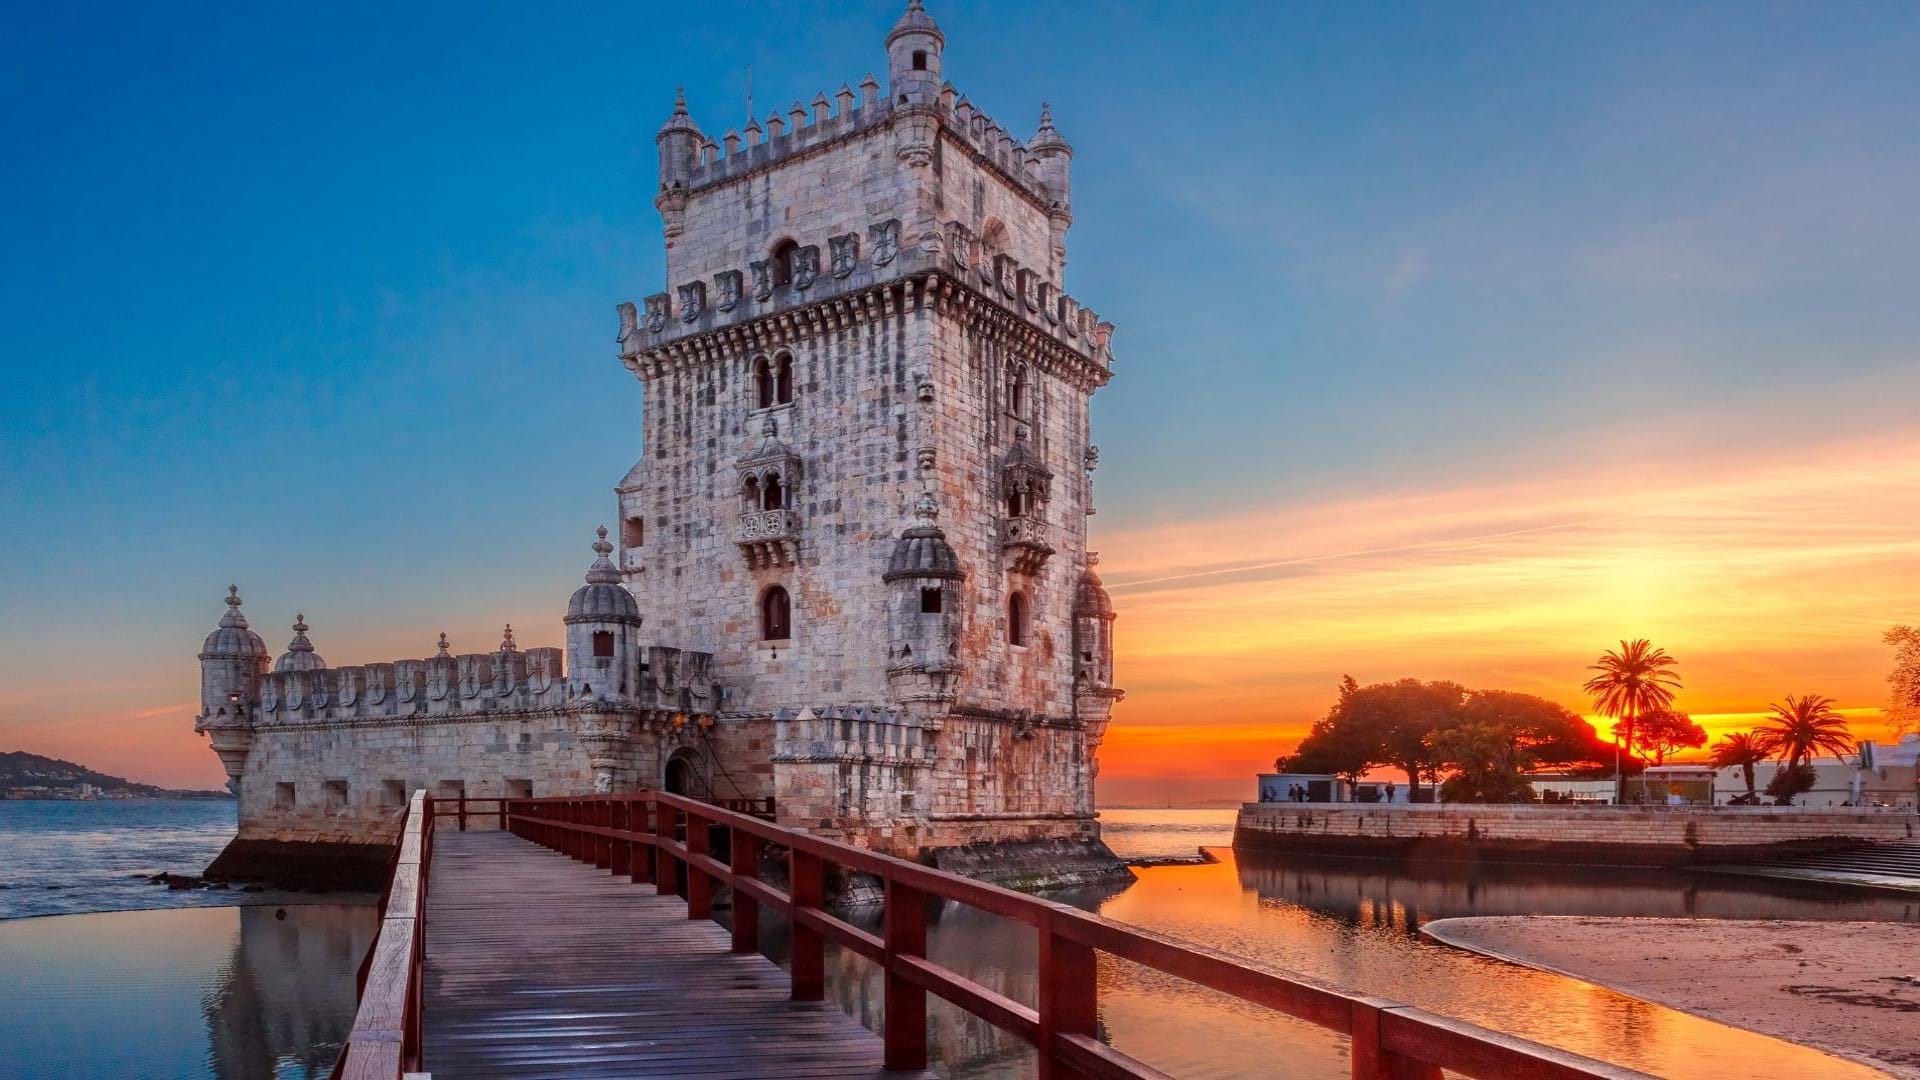 Torre De Belem - Izgrađen u 16. veku, ovaj toranj je danas jedan od najpoznatijih simbola Lisabona. To je predivan primer manuelinske arhitekture, a ujedno je i UNESCO-v svetski spomenik.